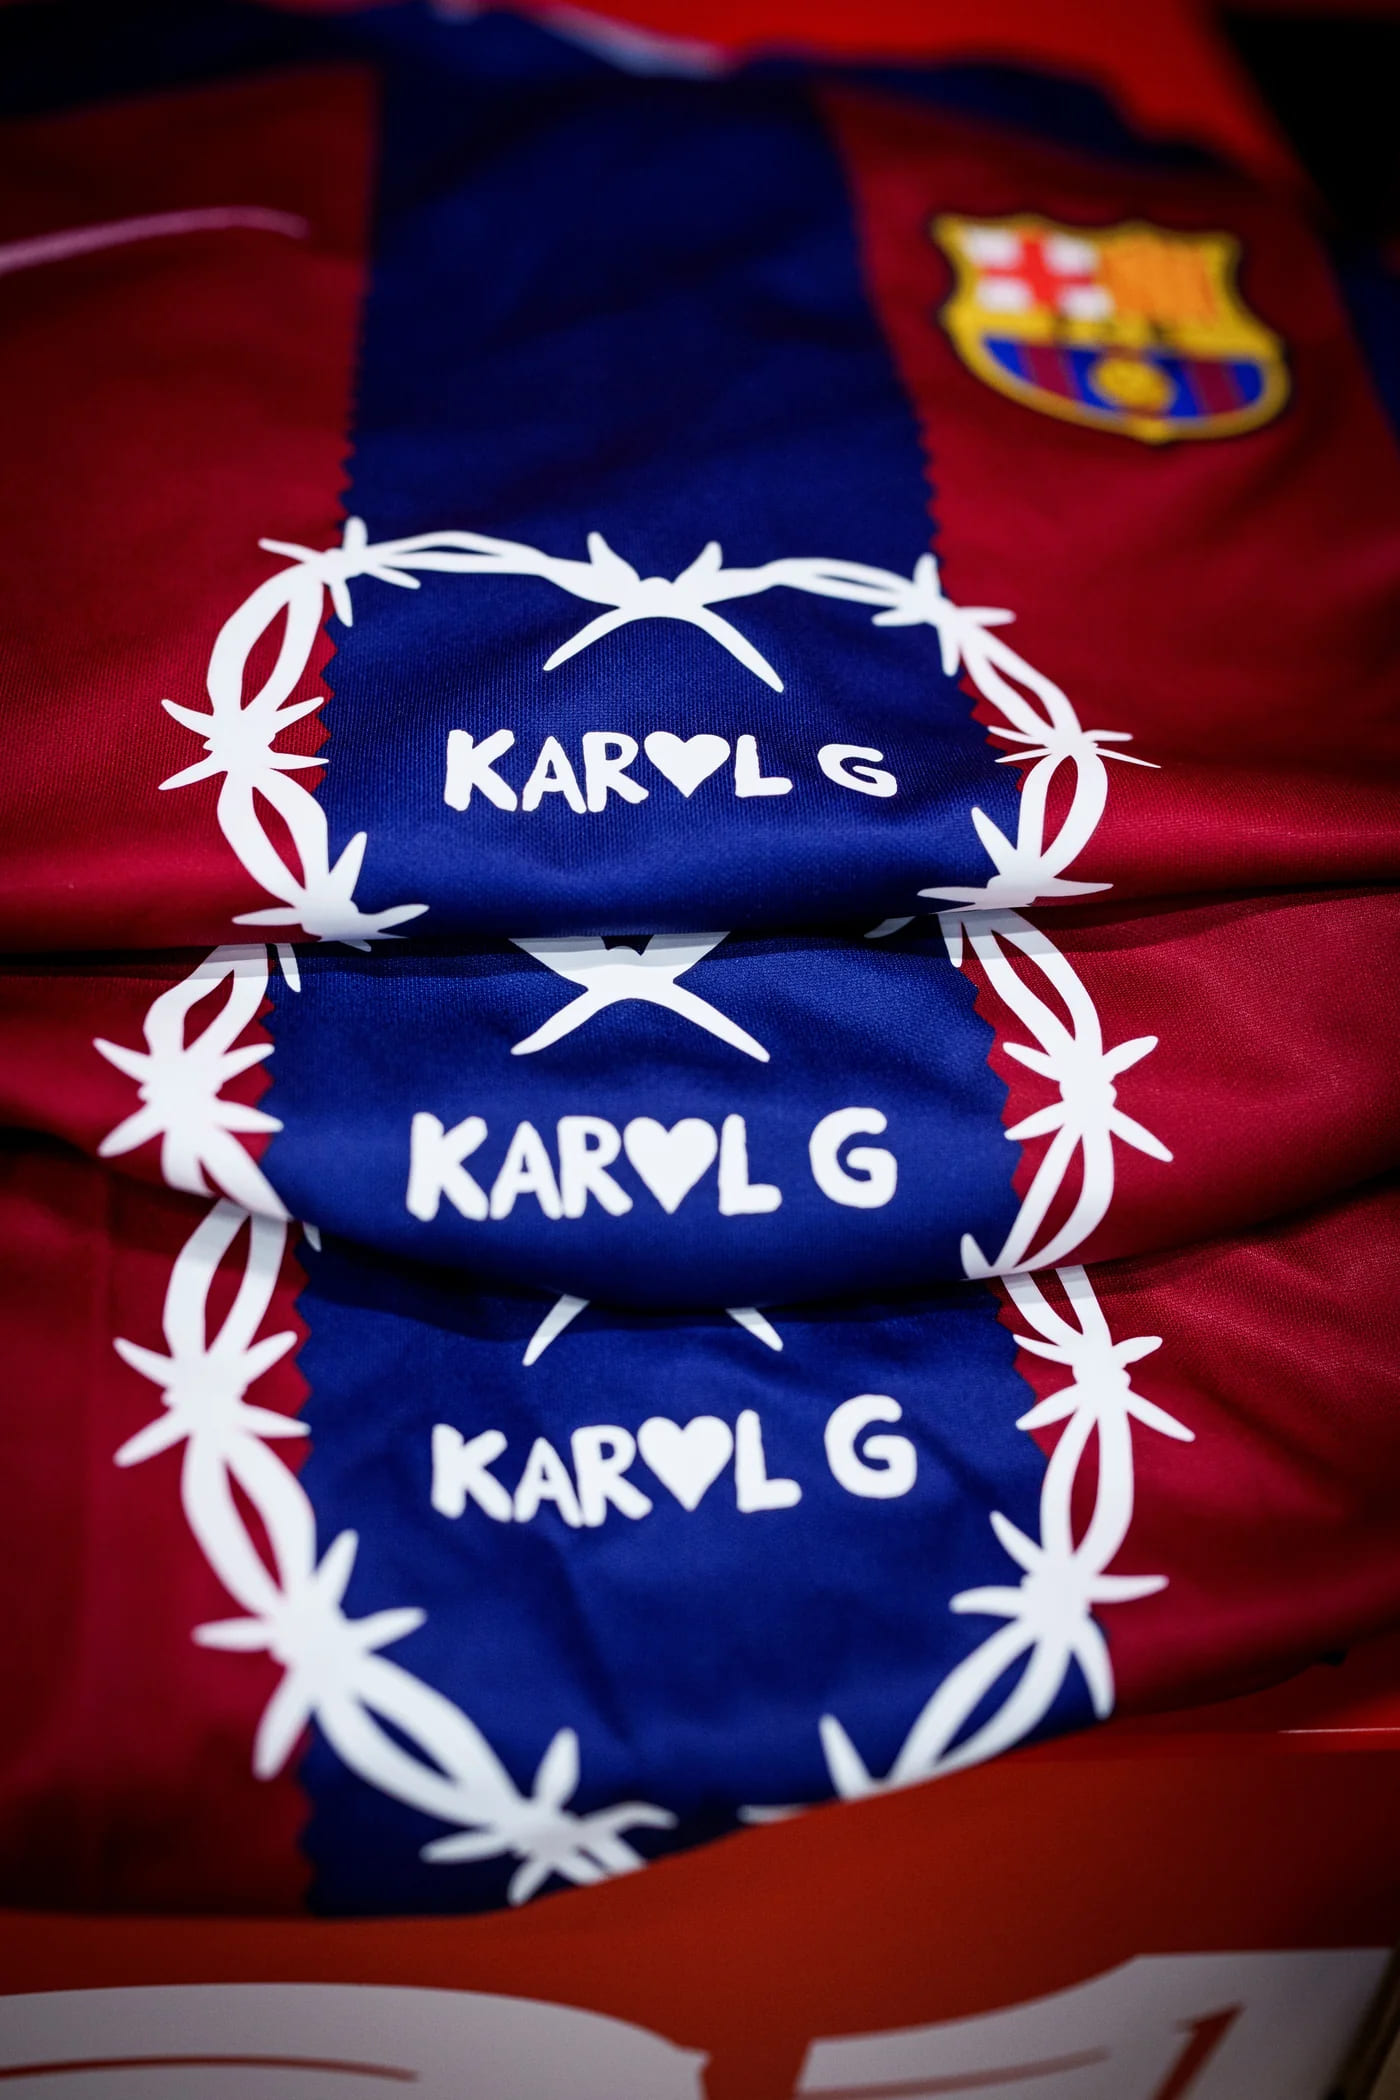 barcelona X karol G version original en camisetasfutbol.mx.jpg